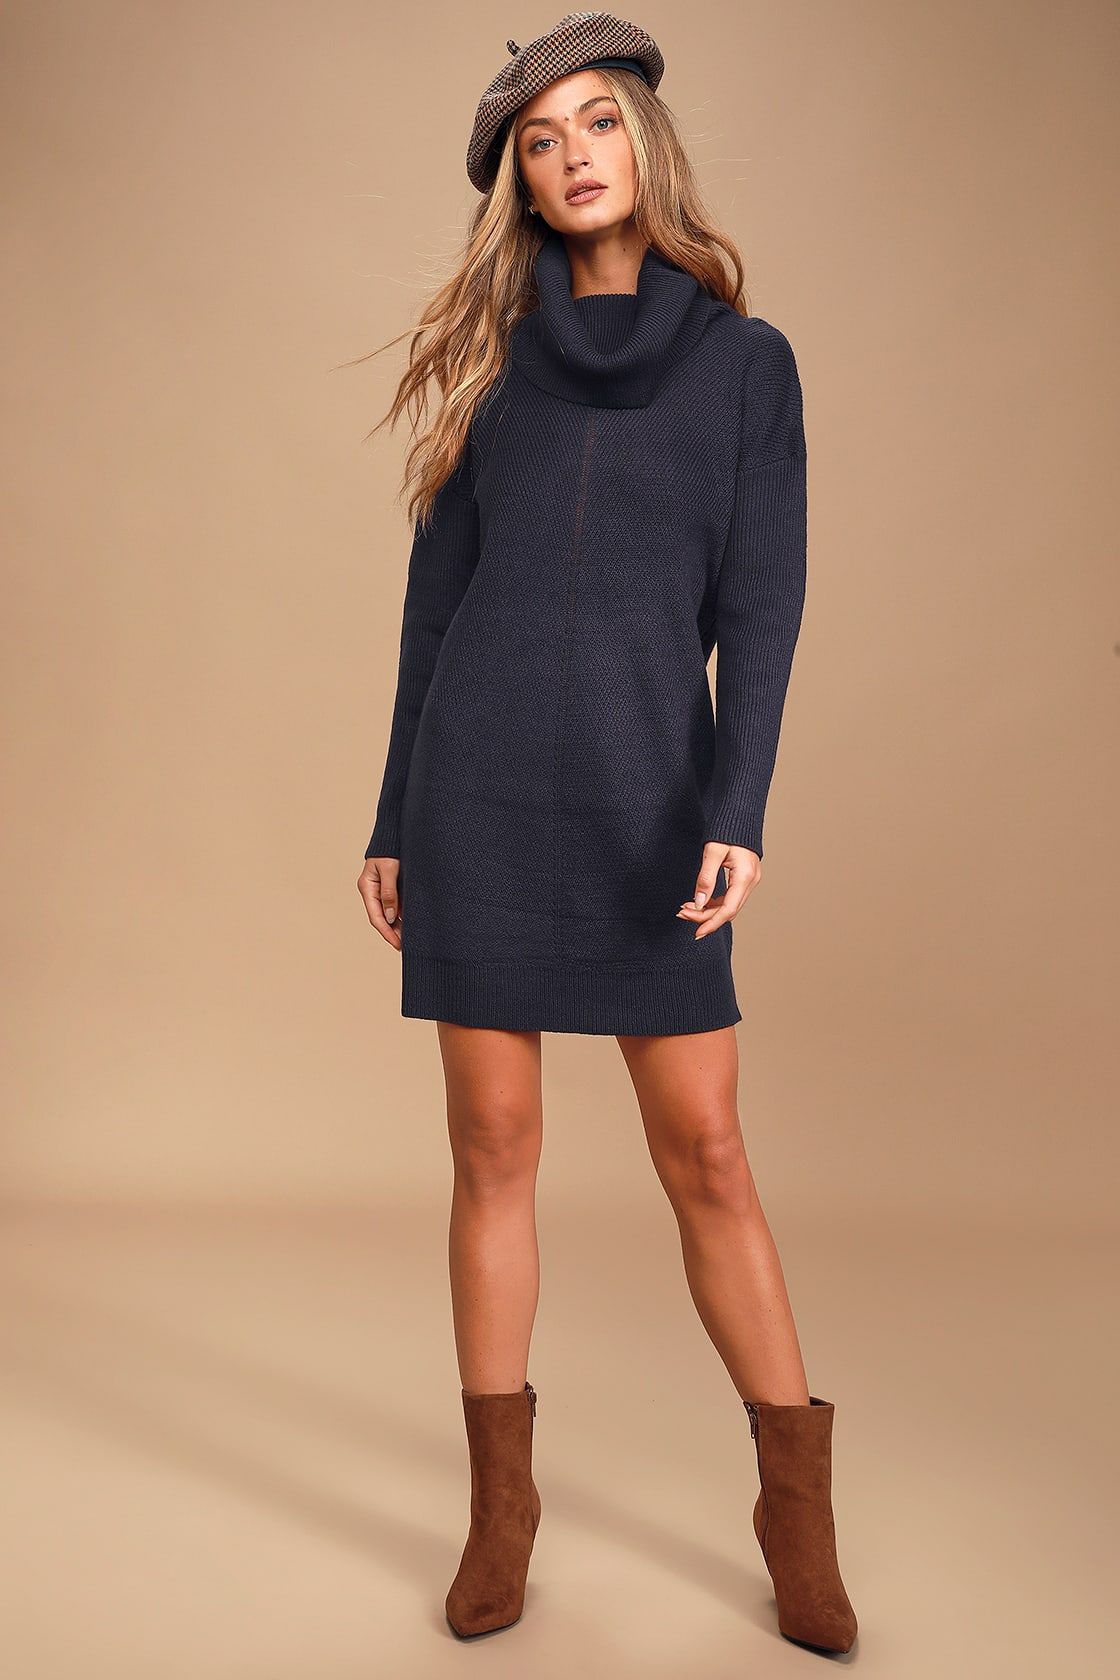 Tea Reader Navy Blue Sweater Dress | Lulus (US)